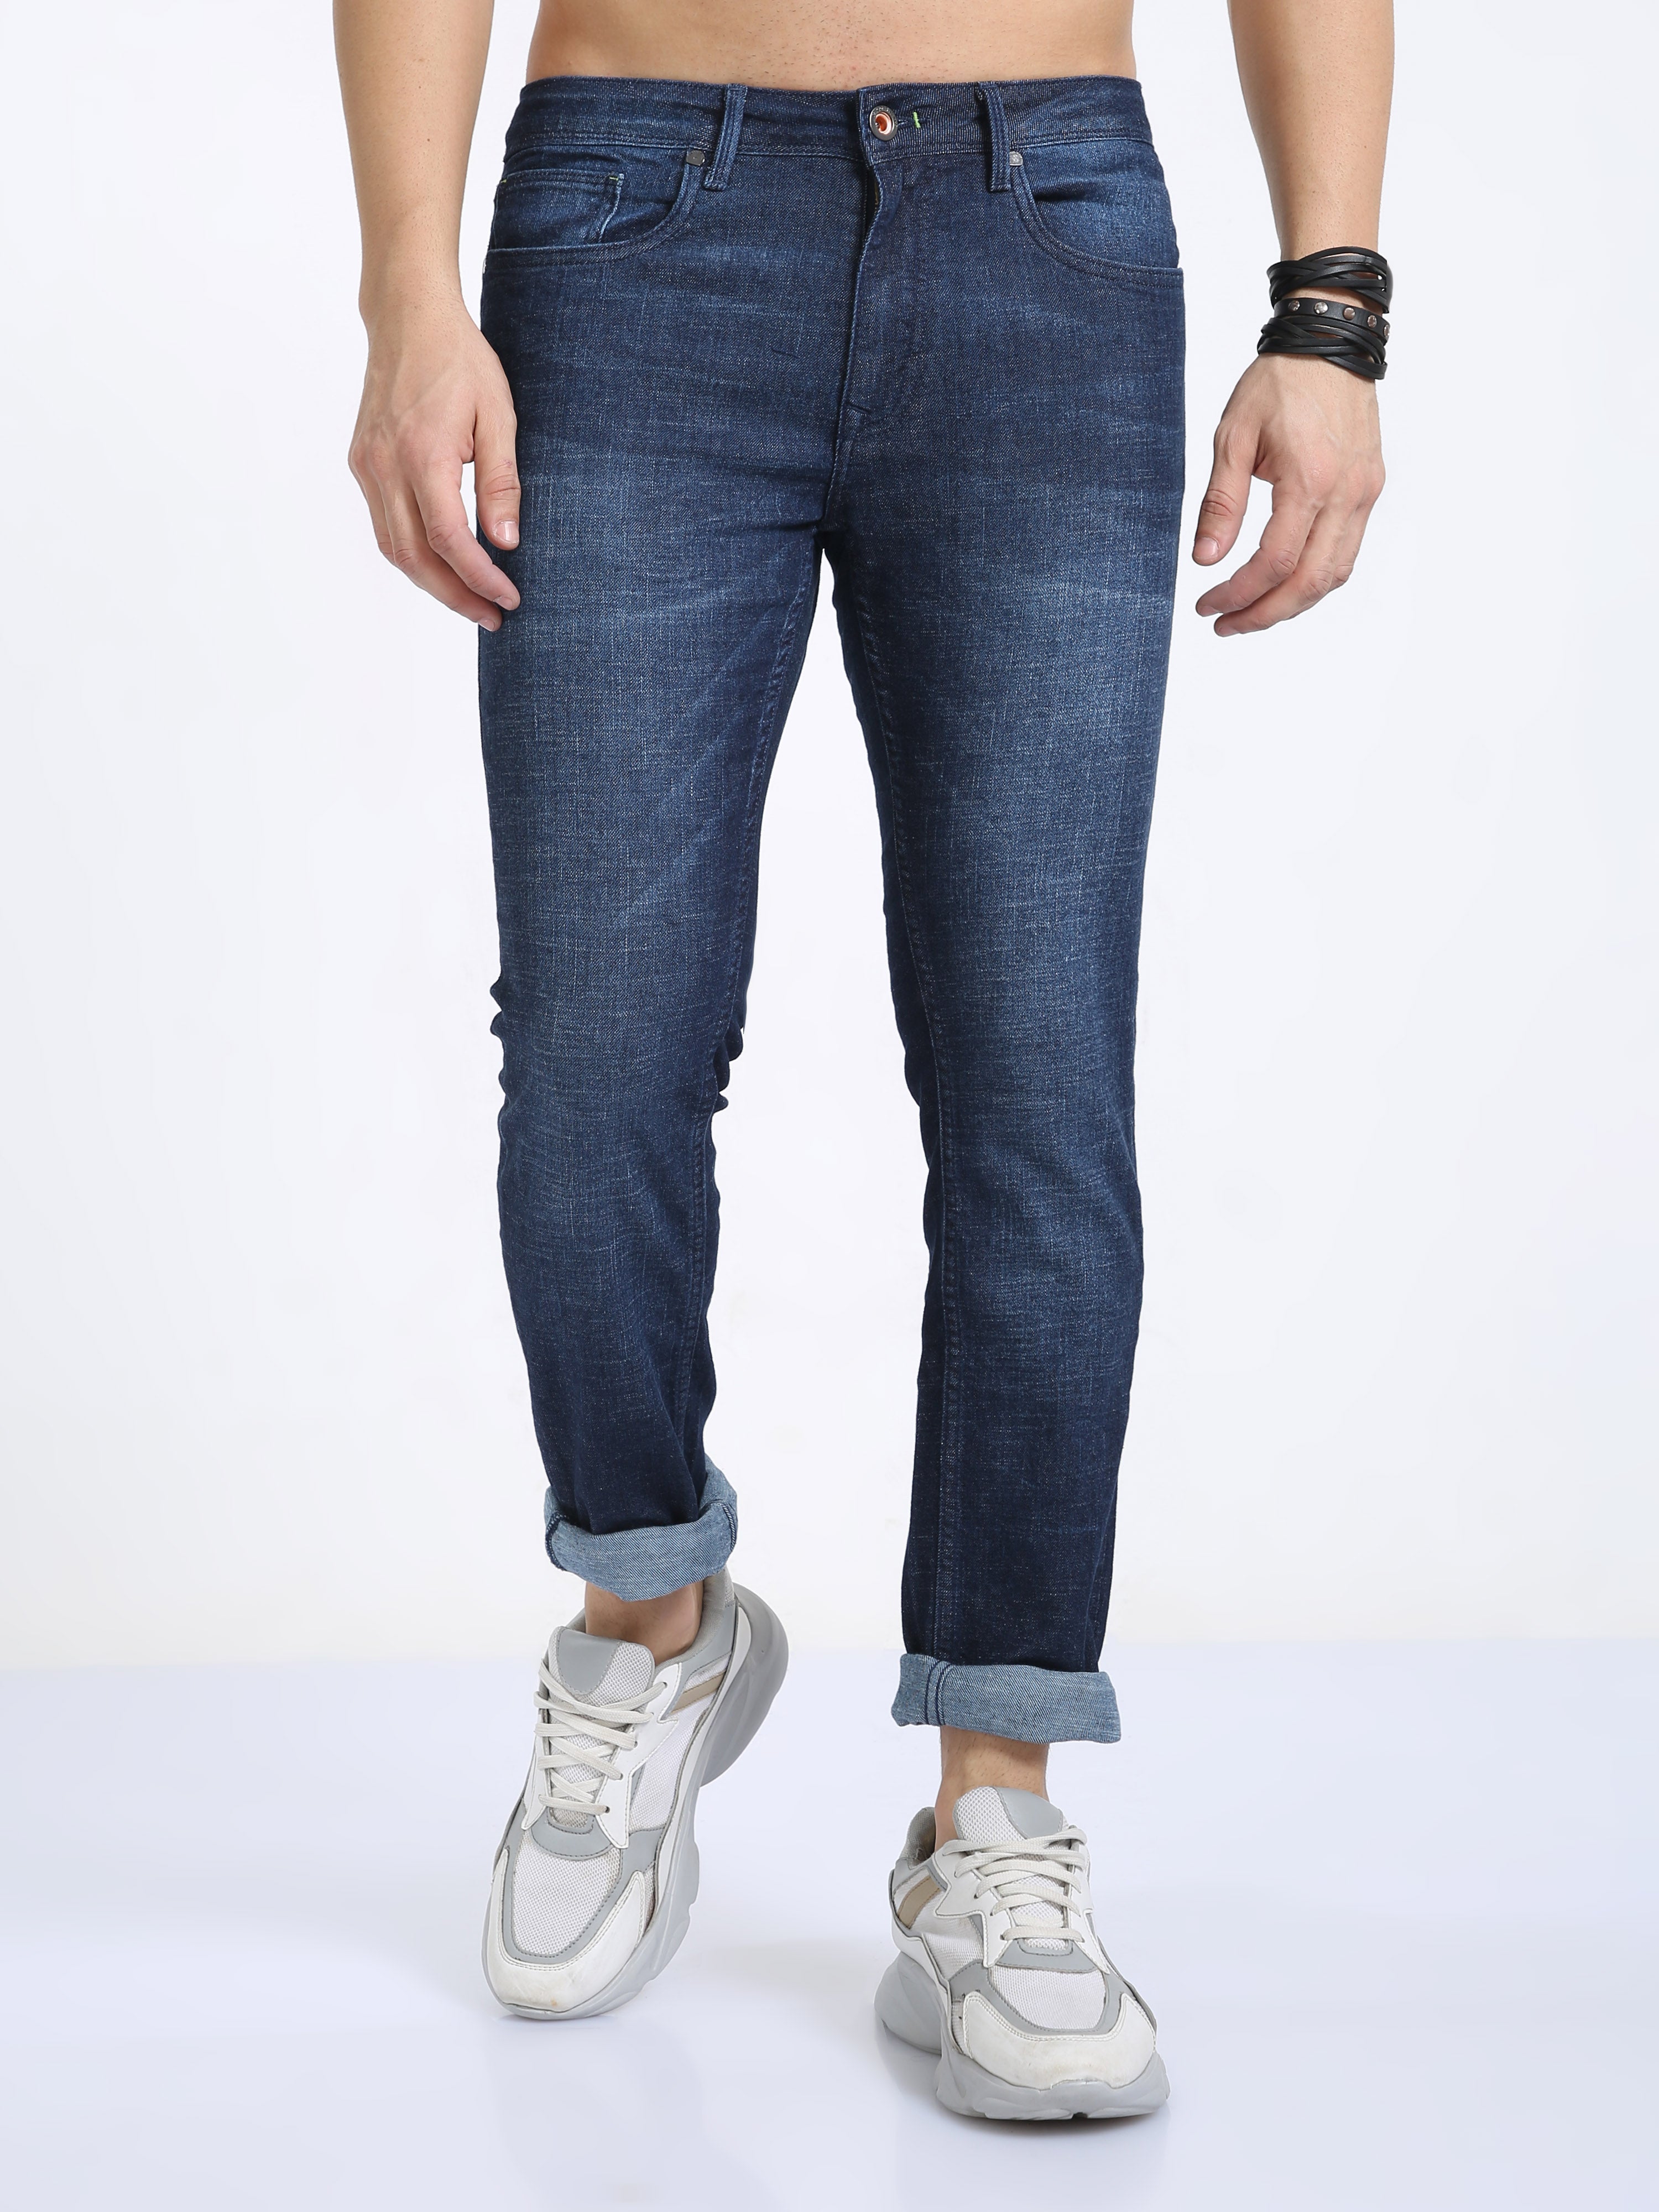 Active wild blue yonder Motion Men's Slim-Fit Jeans